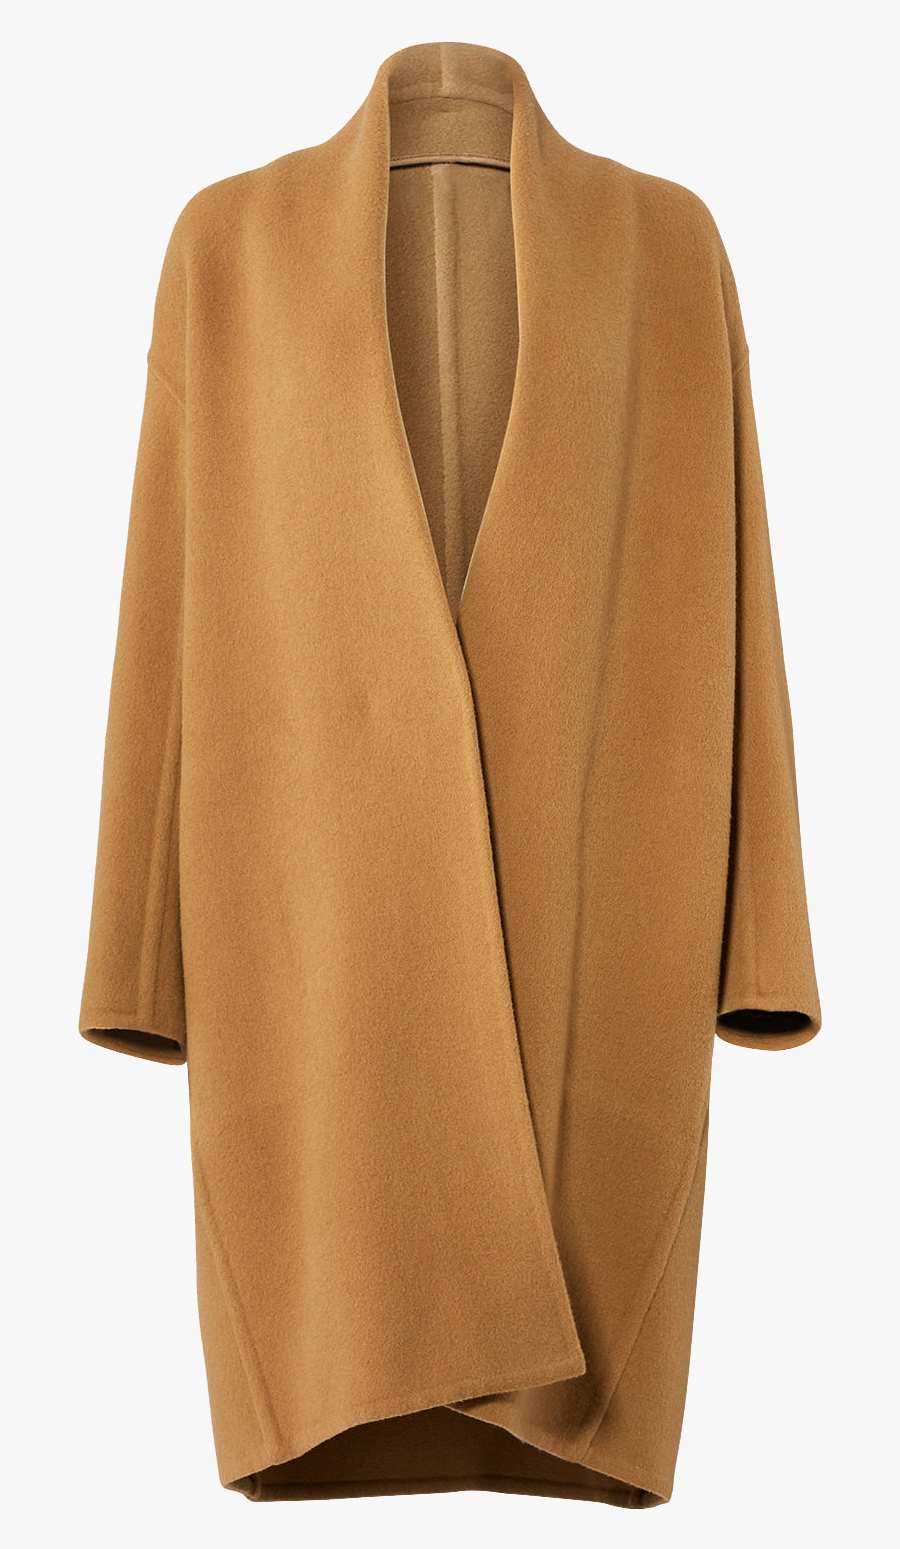 Brown Coat Png Clipart - Overcoat, Transparent Clipart